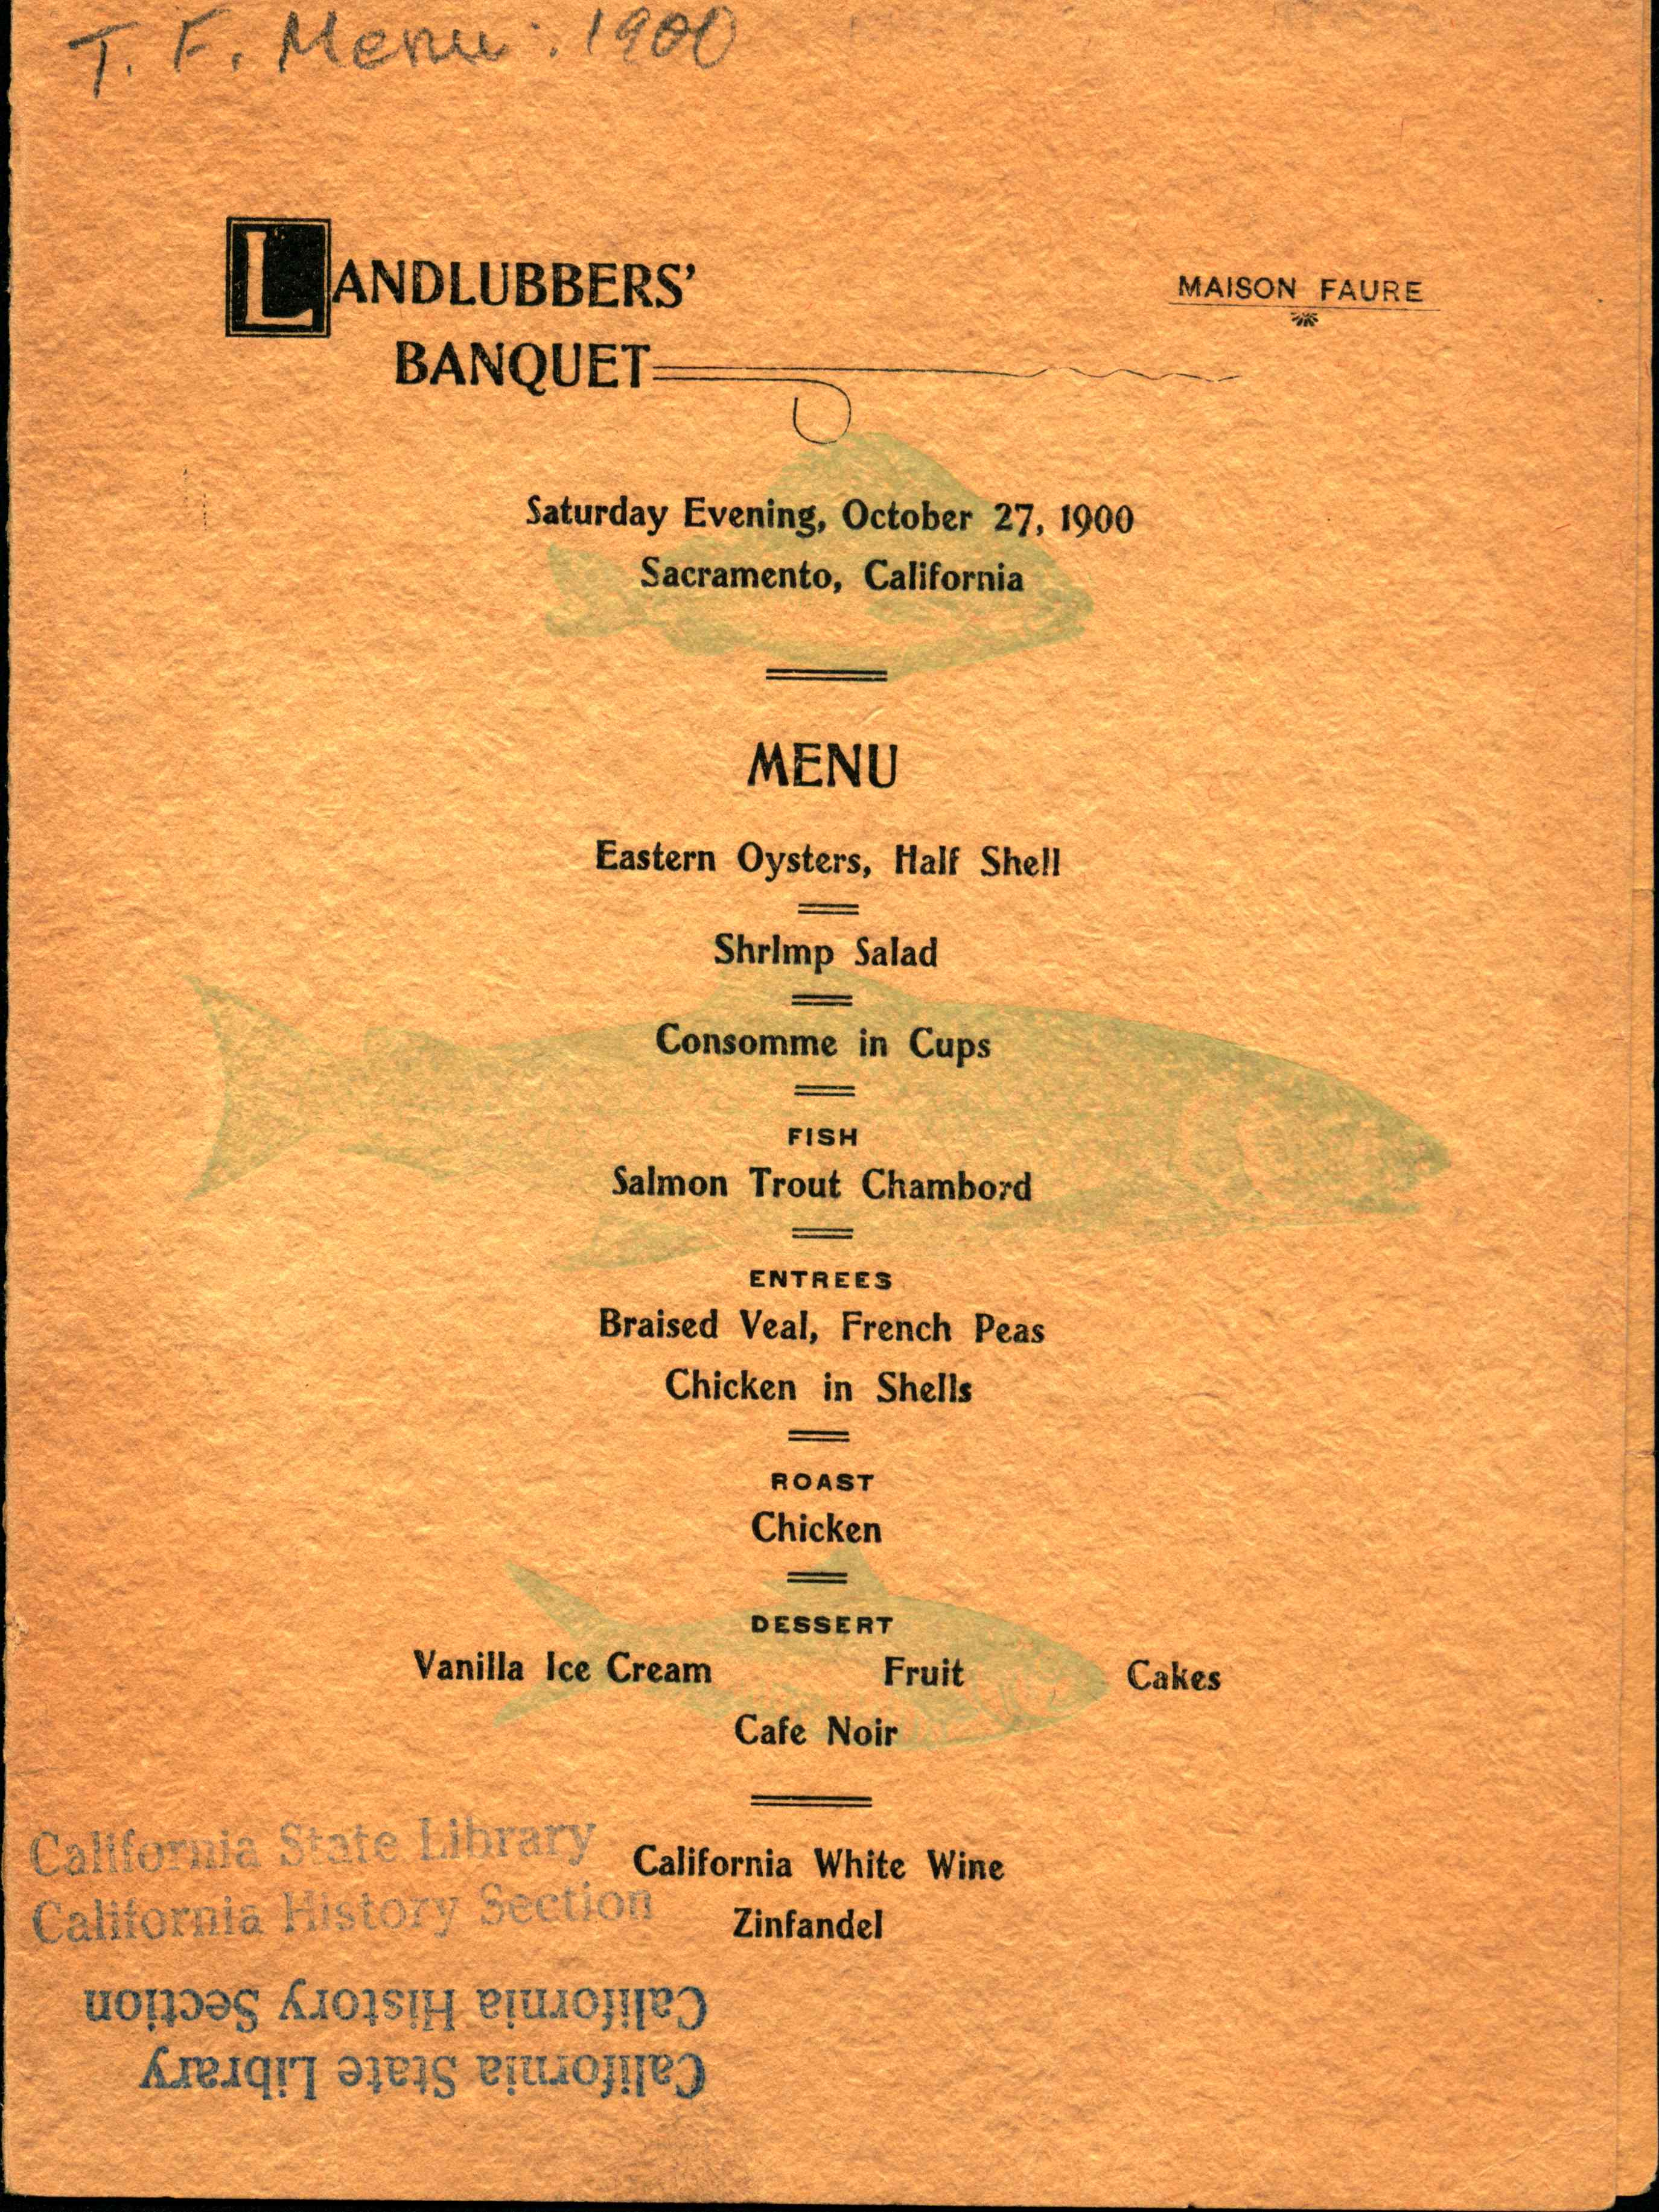 Fish printed on the menu